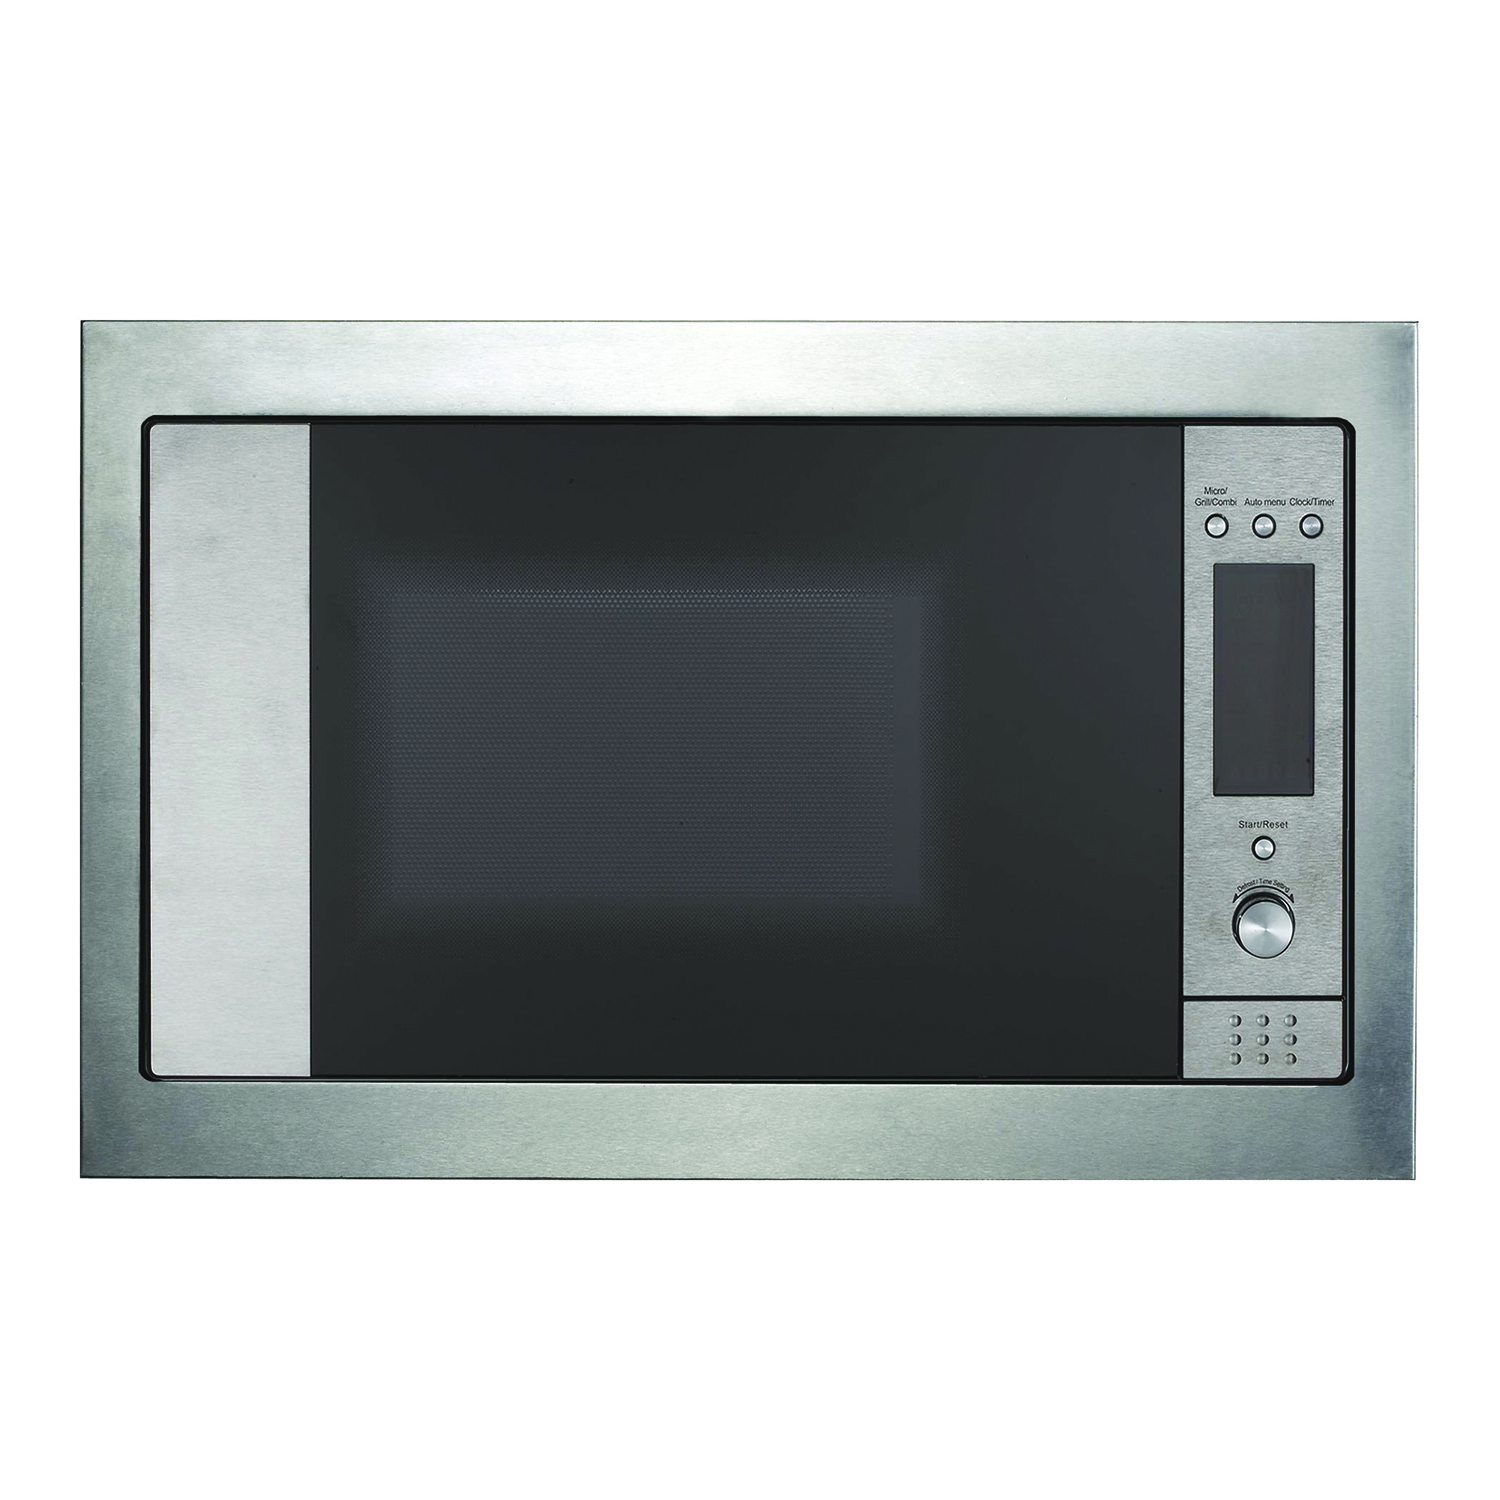 BM5350X - Gorenje Microwave  with grill, 60 cm, stainless steel BM5350X